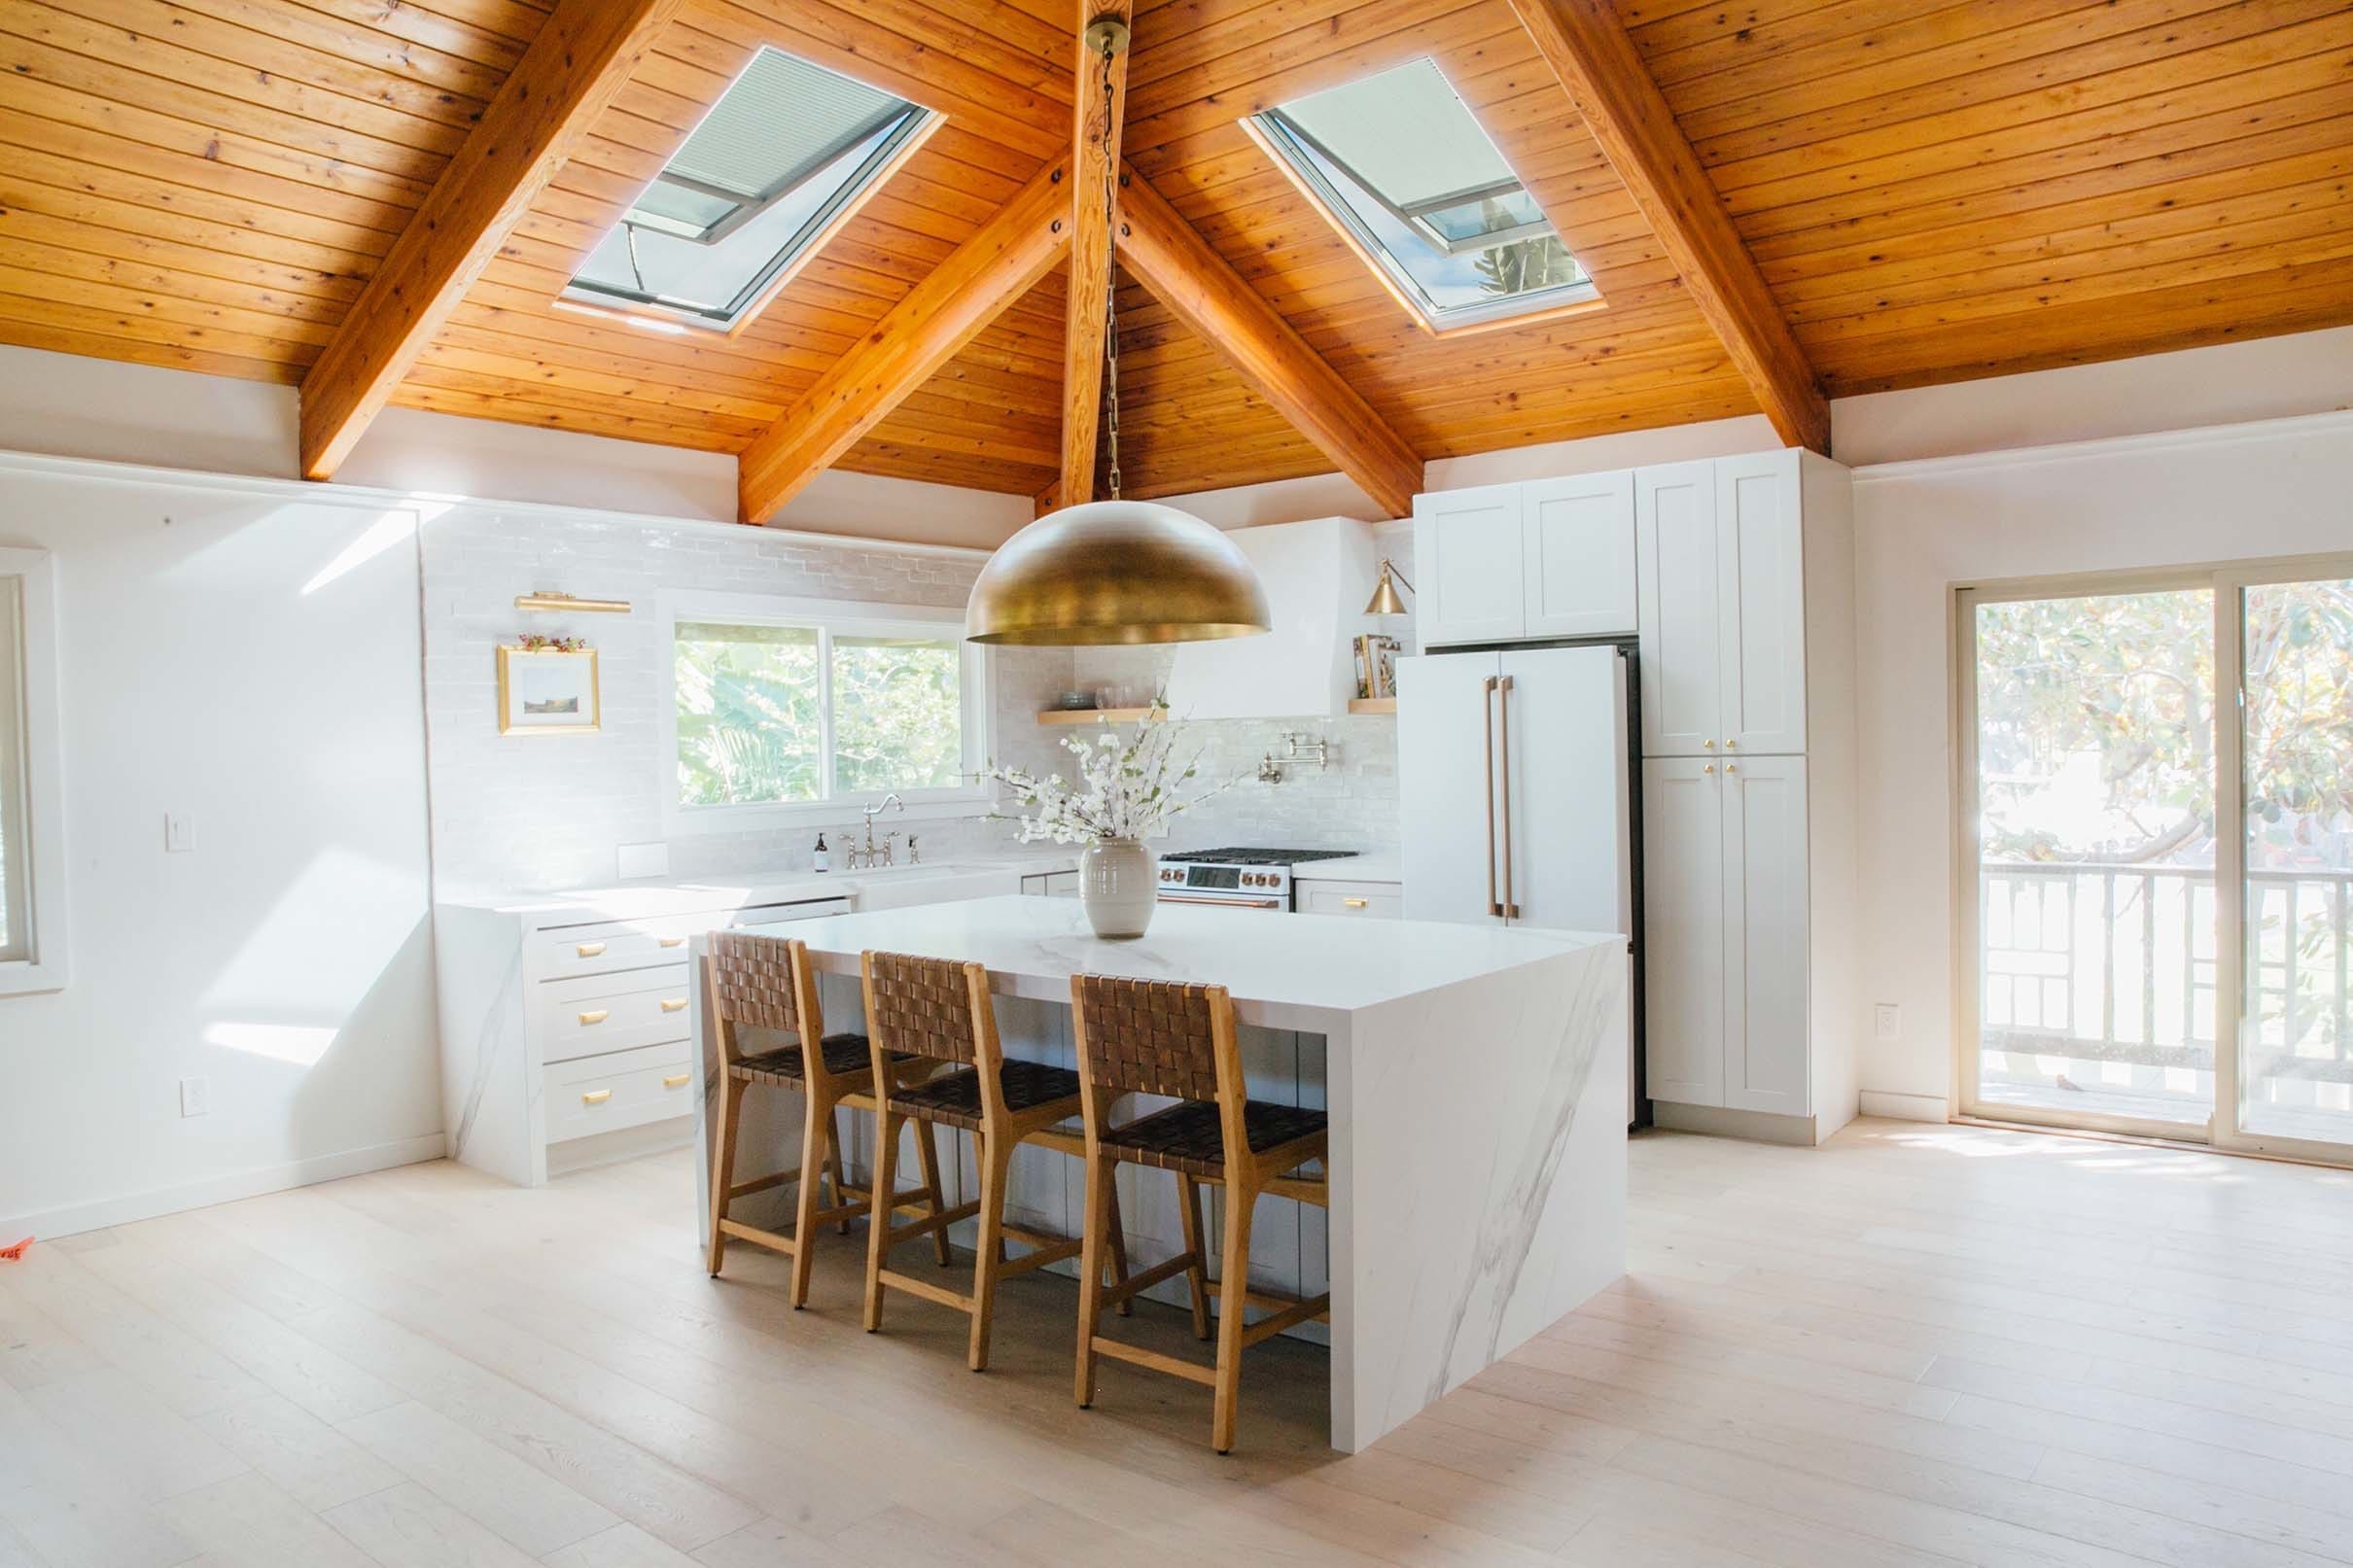 Kitchen wood ceiling skylights white island